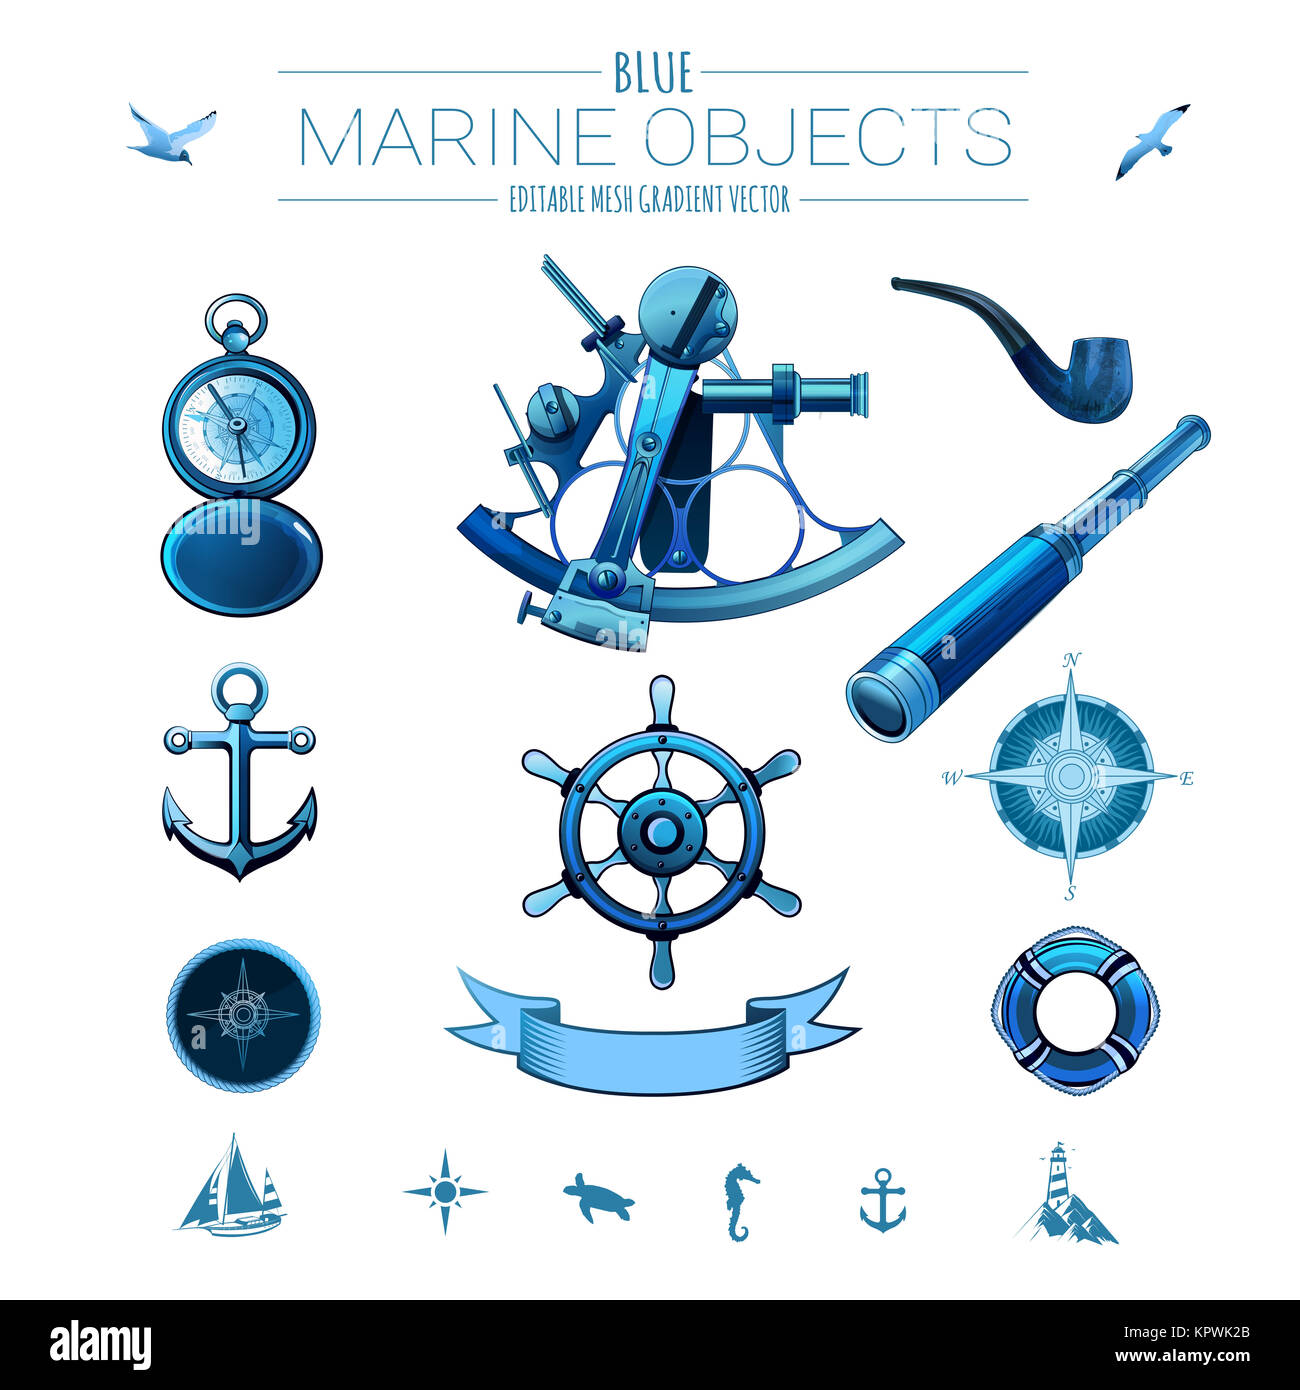 Blue marine objects Stock Photo